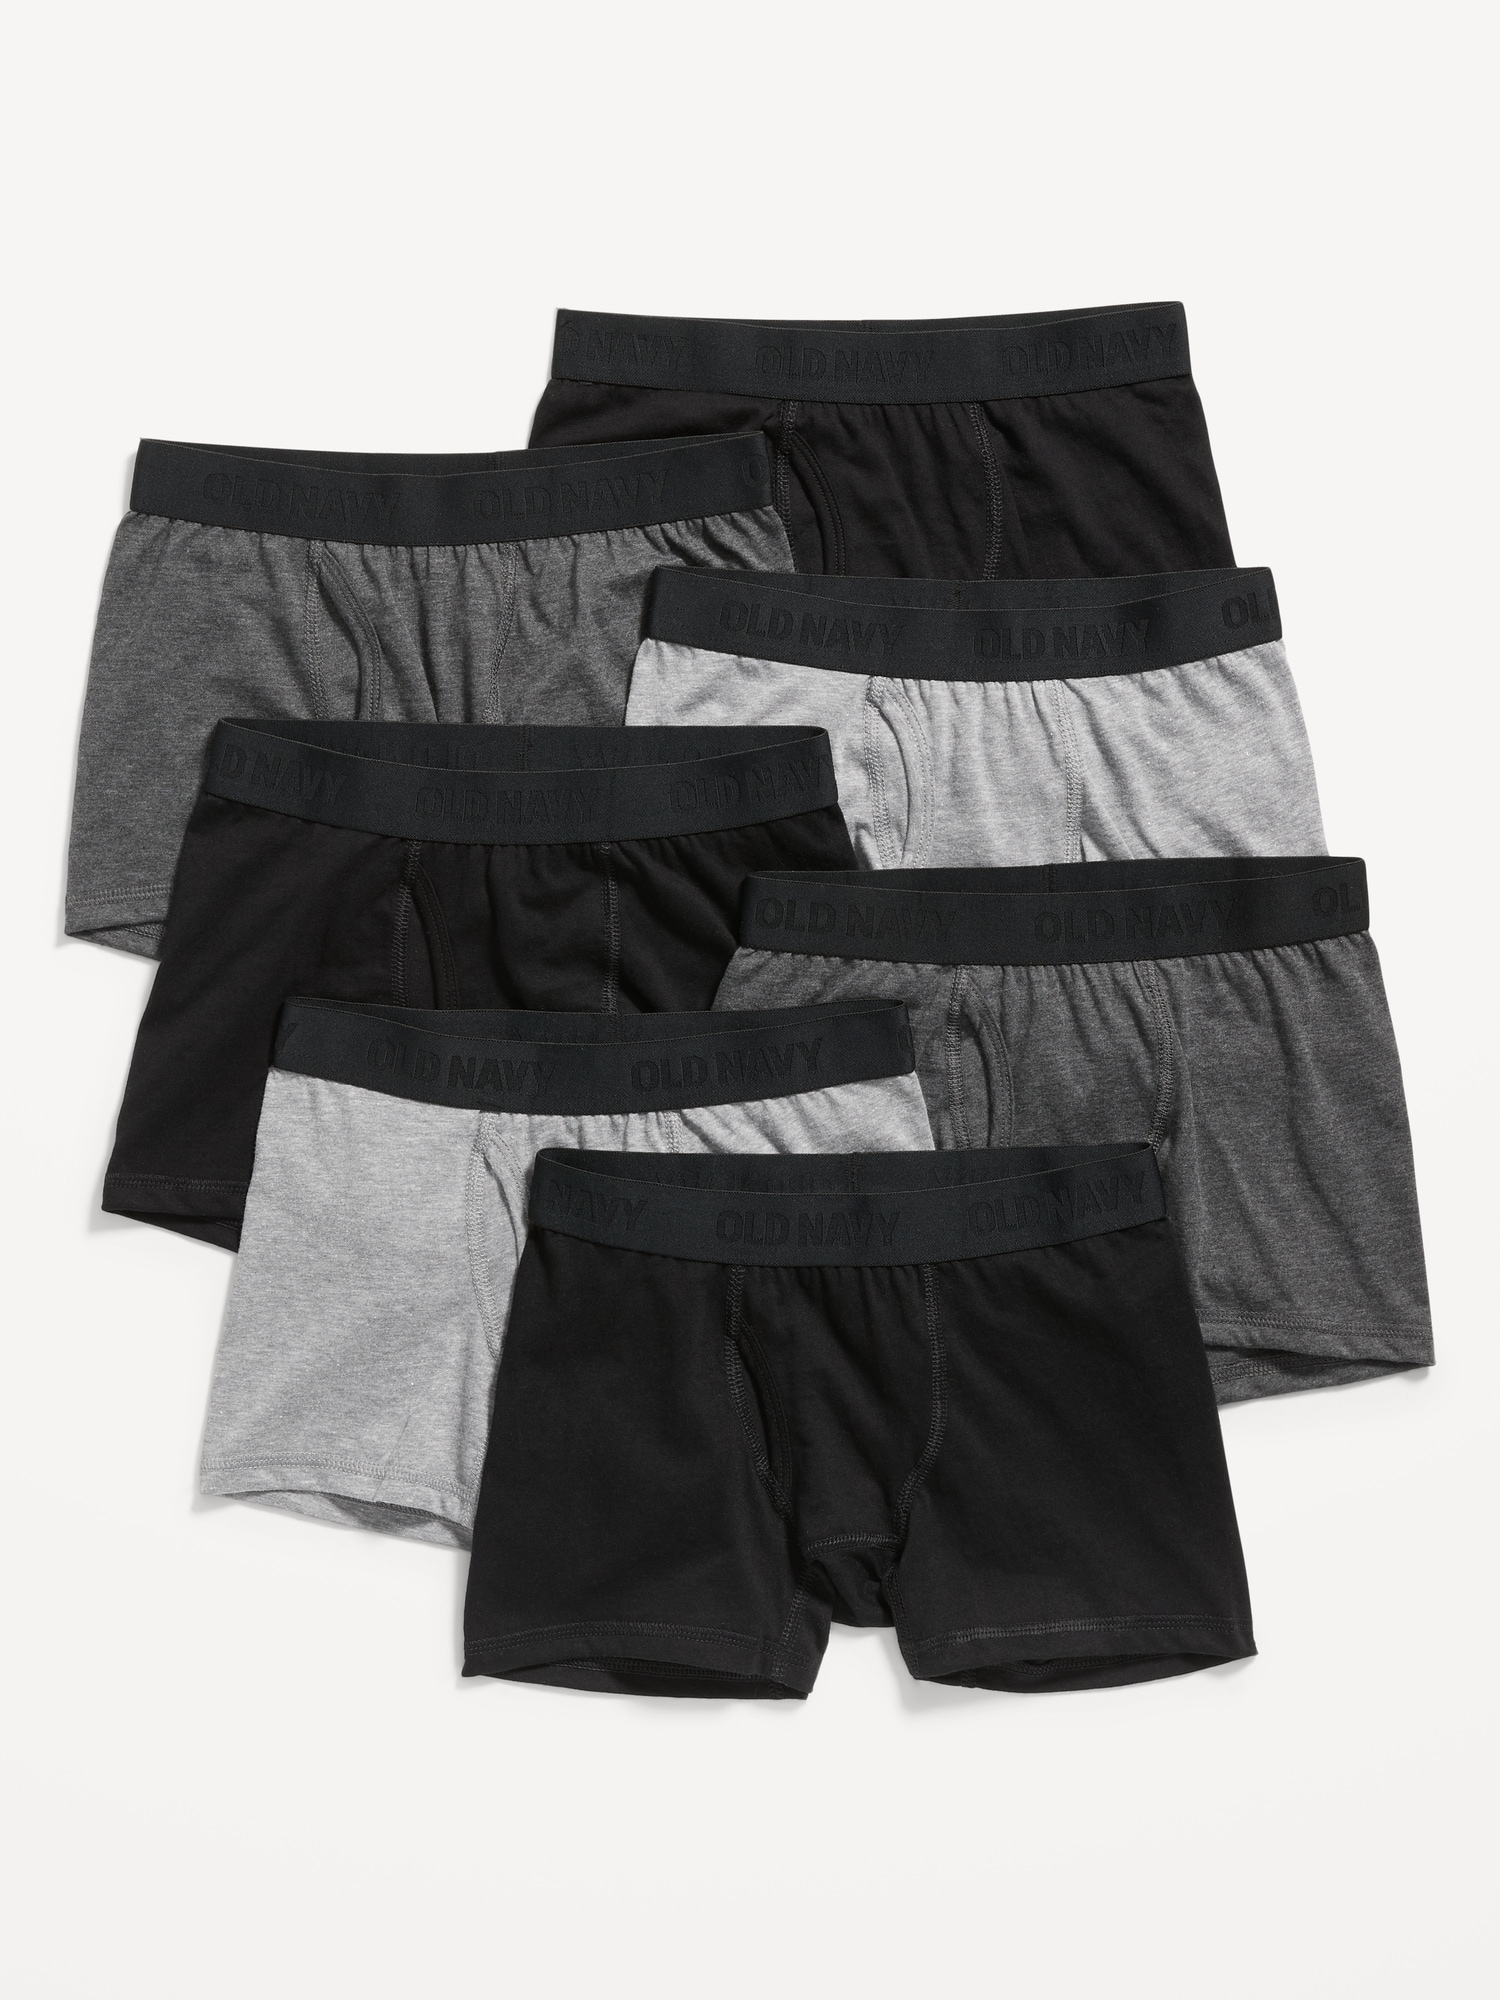 Boxer-Briefs Underwear 7-Pack for Boys | Old Navy